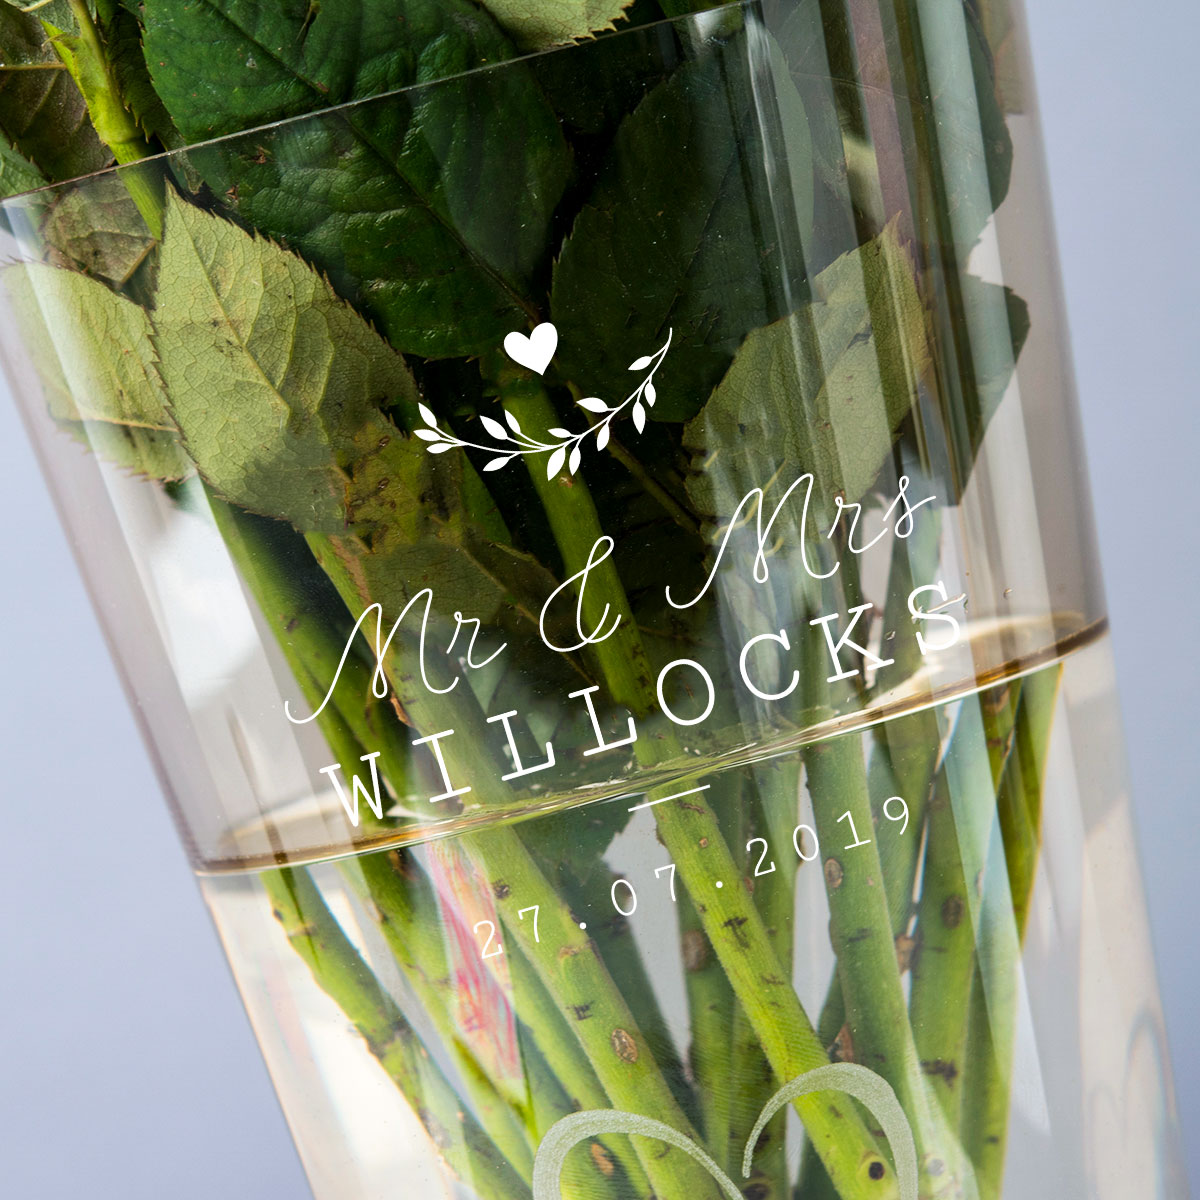 Engraved Gold Swarovski® Elements Glass Vase - Wildflower Couple